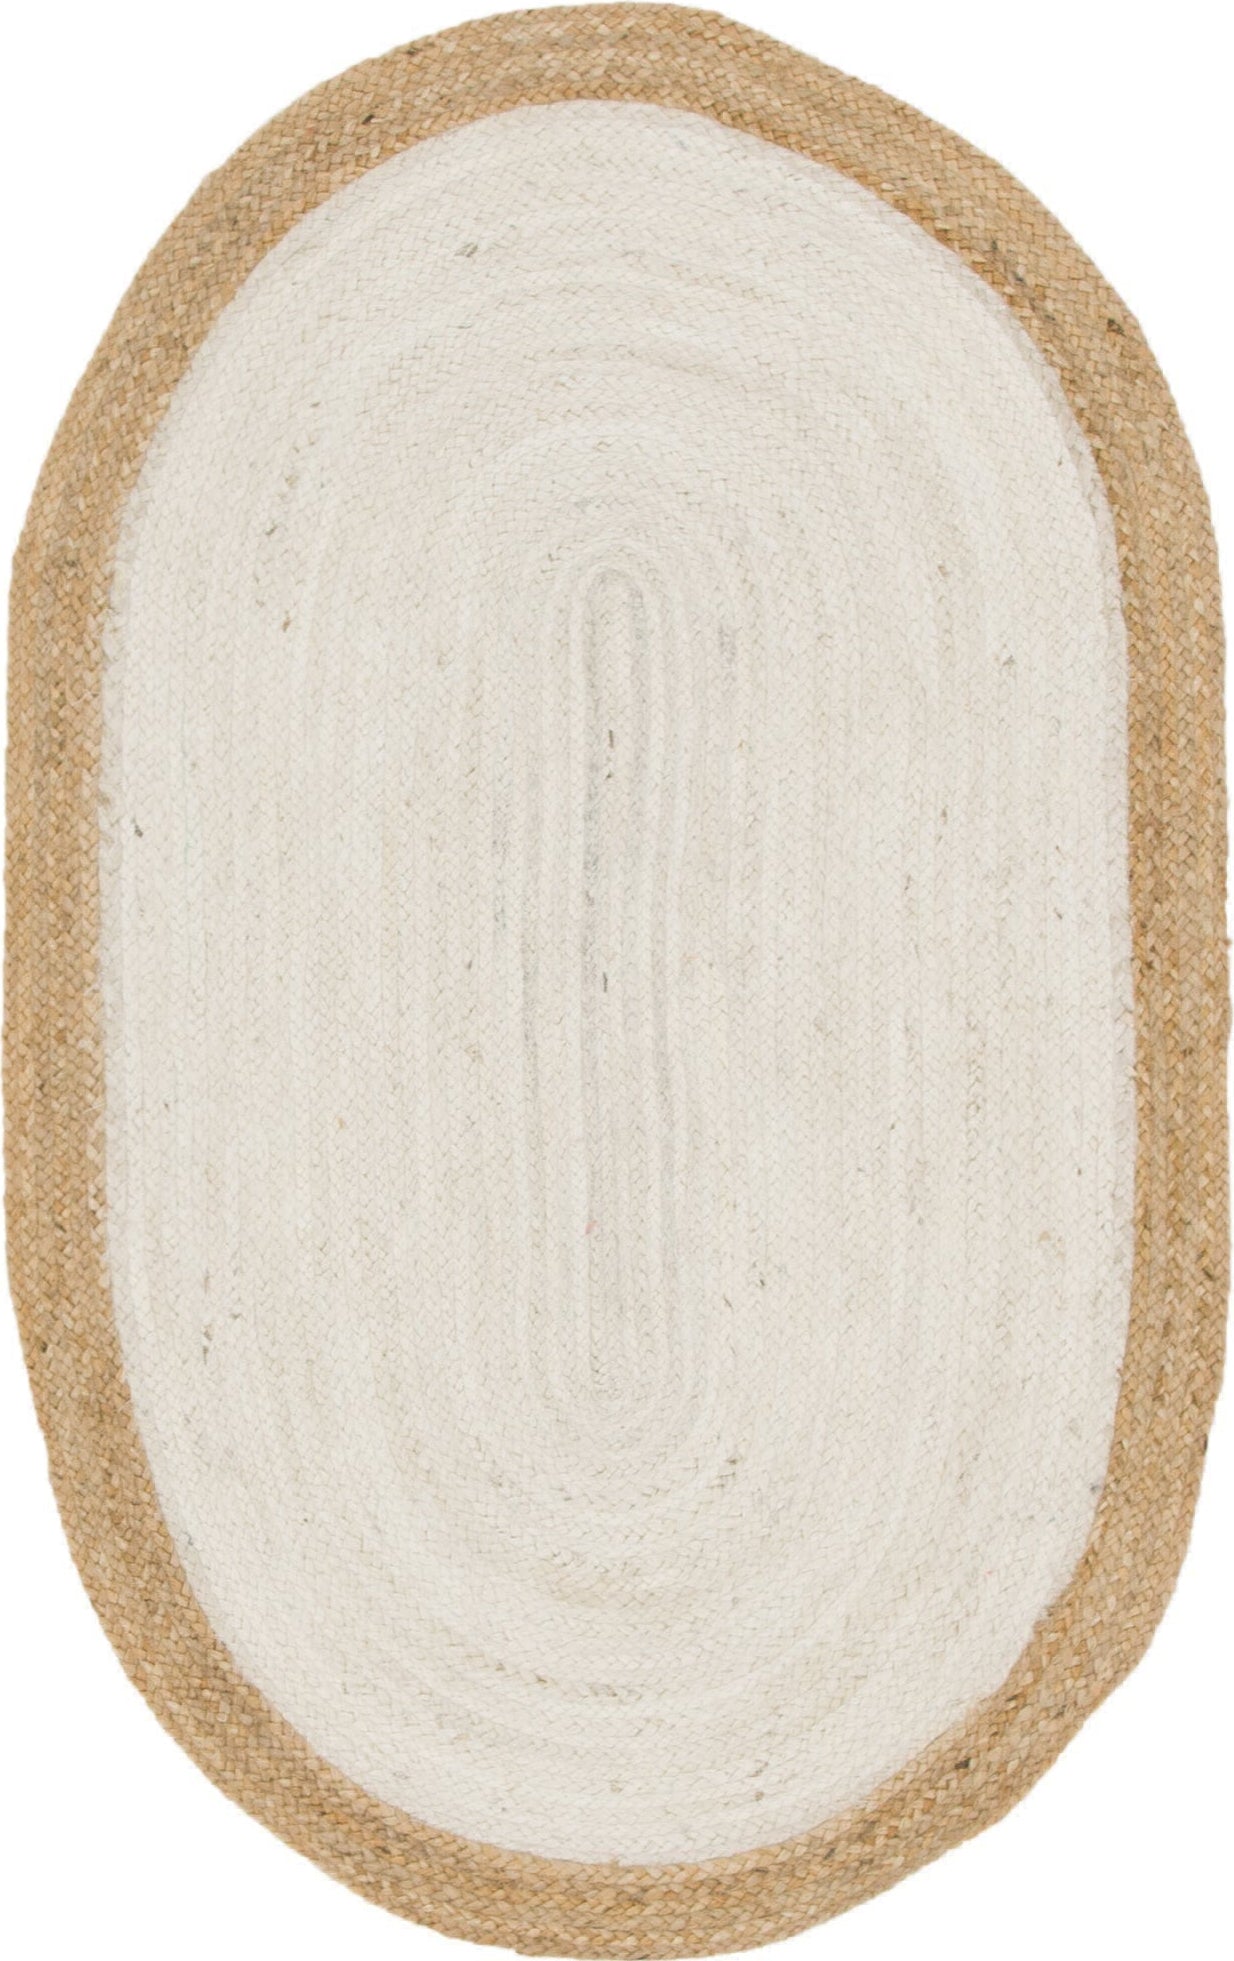 Unique Loom Braided Jute MGN-4 Ivory Area Rug main image